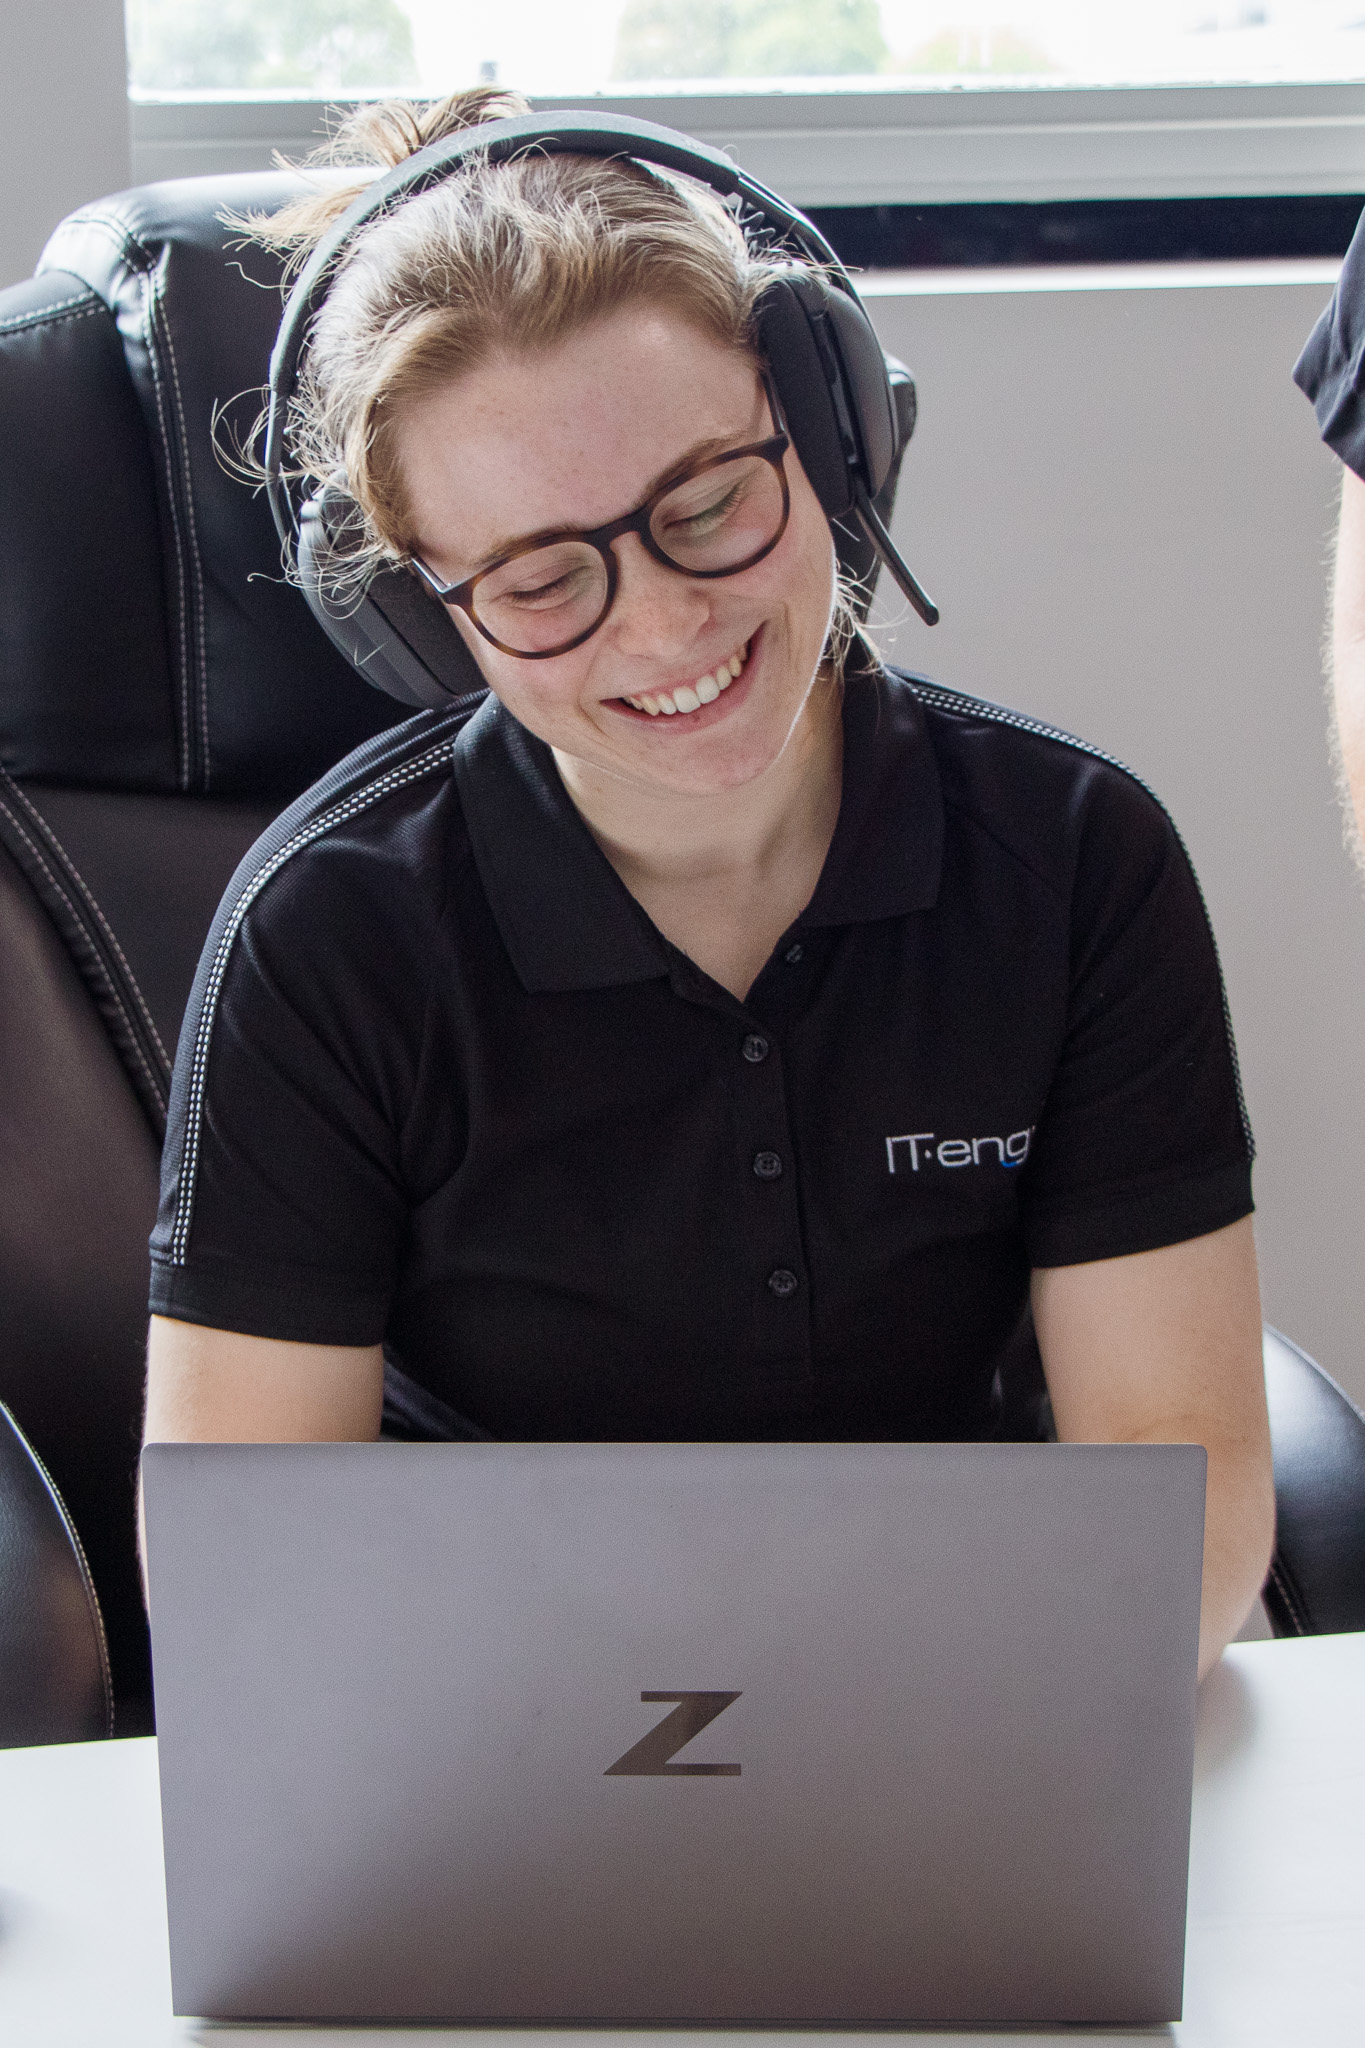 IT Hub - Team member working on laptop while wearing headset